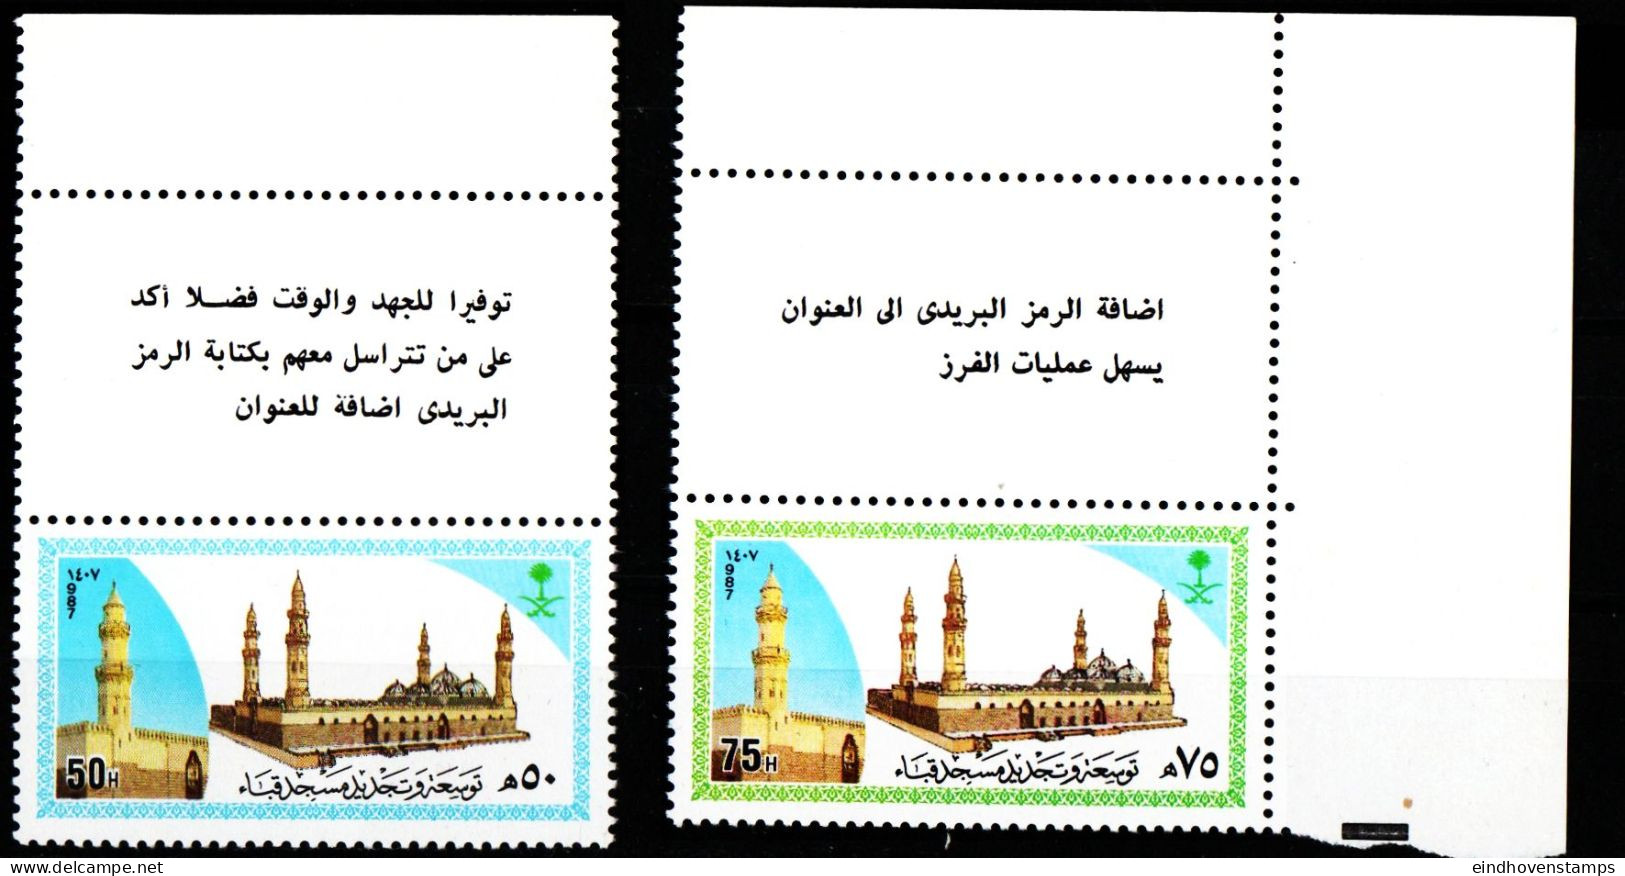 Saudi Arabia 1987 Quba Mosqee Medina, Restauration, 2 Values With Text Tabs MNH SA-87-02A - Moschee E Sinagoghe